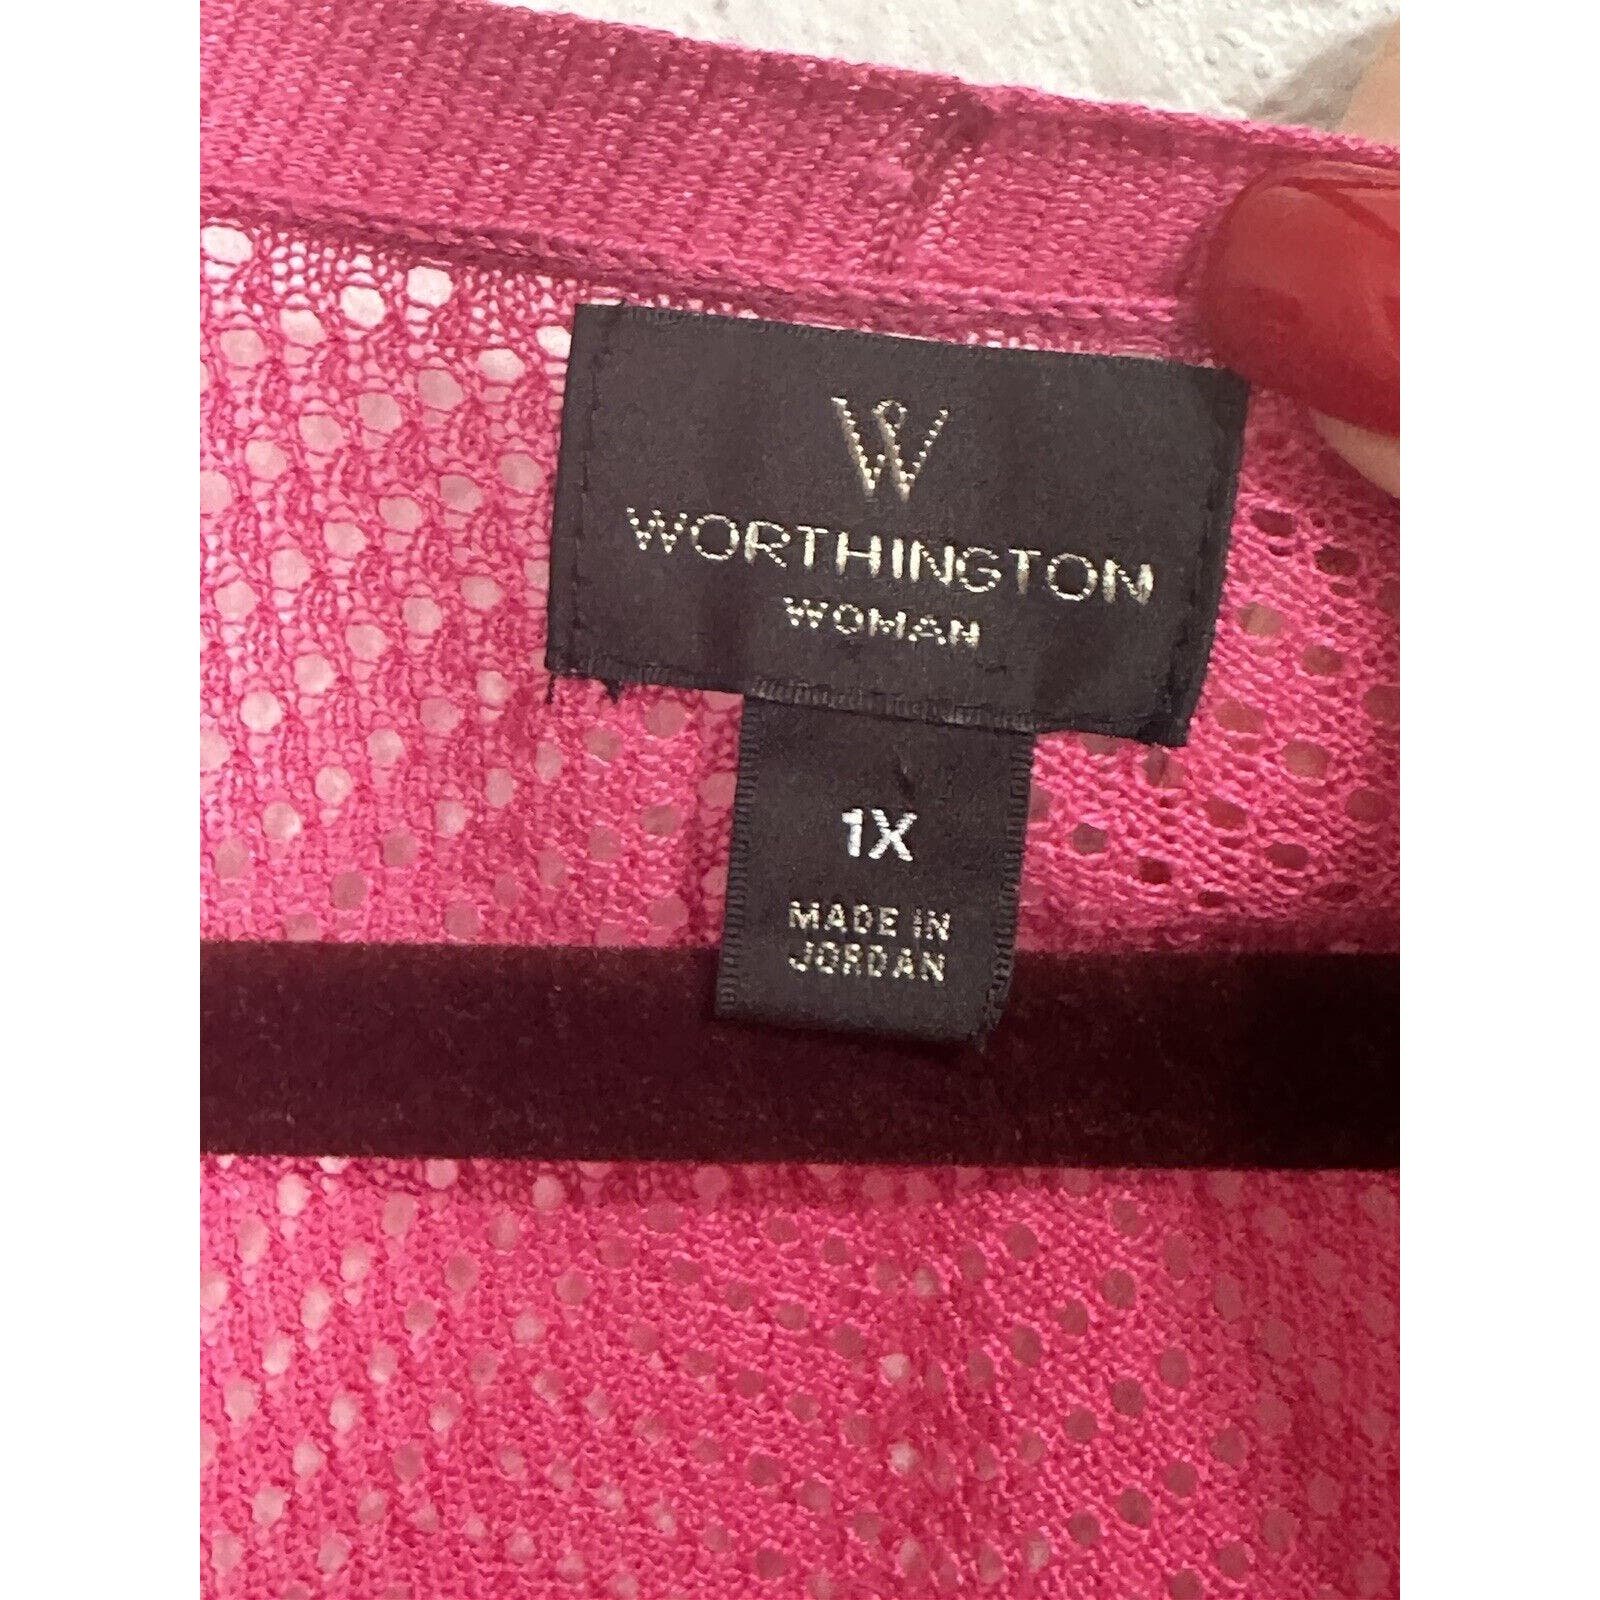 The Best Seller Worthington Women’s Barbie Pink Open Cardigan 3/4 Sleeve Lightweight Size 1X ghpu6GnL9 Counter Genuine 